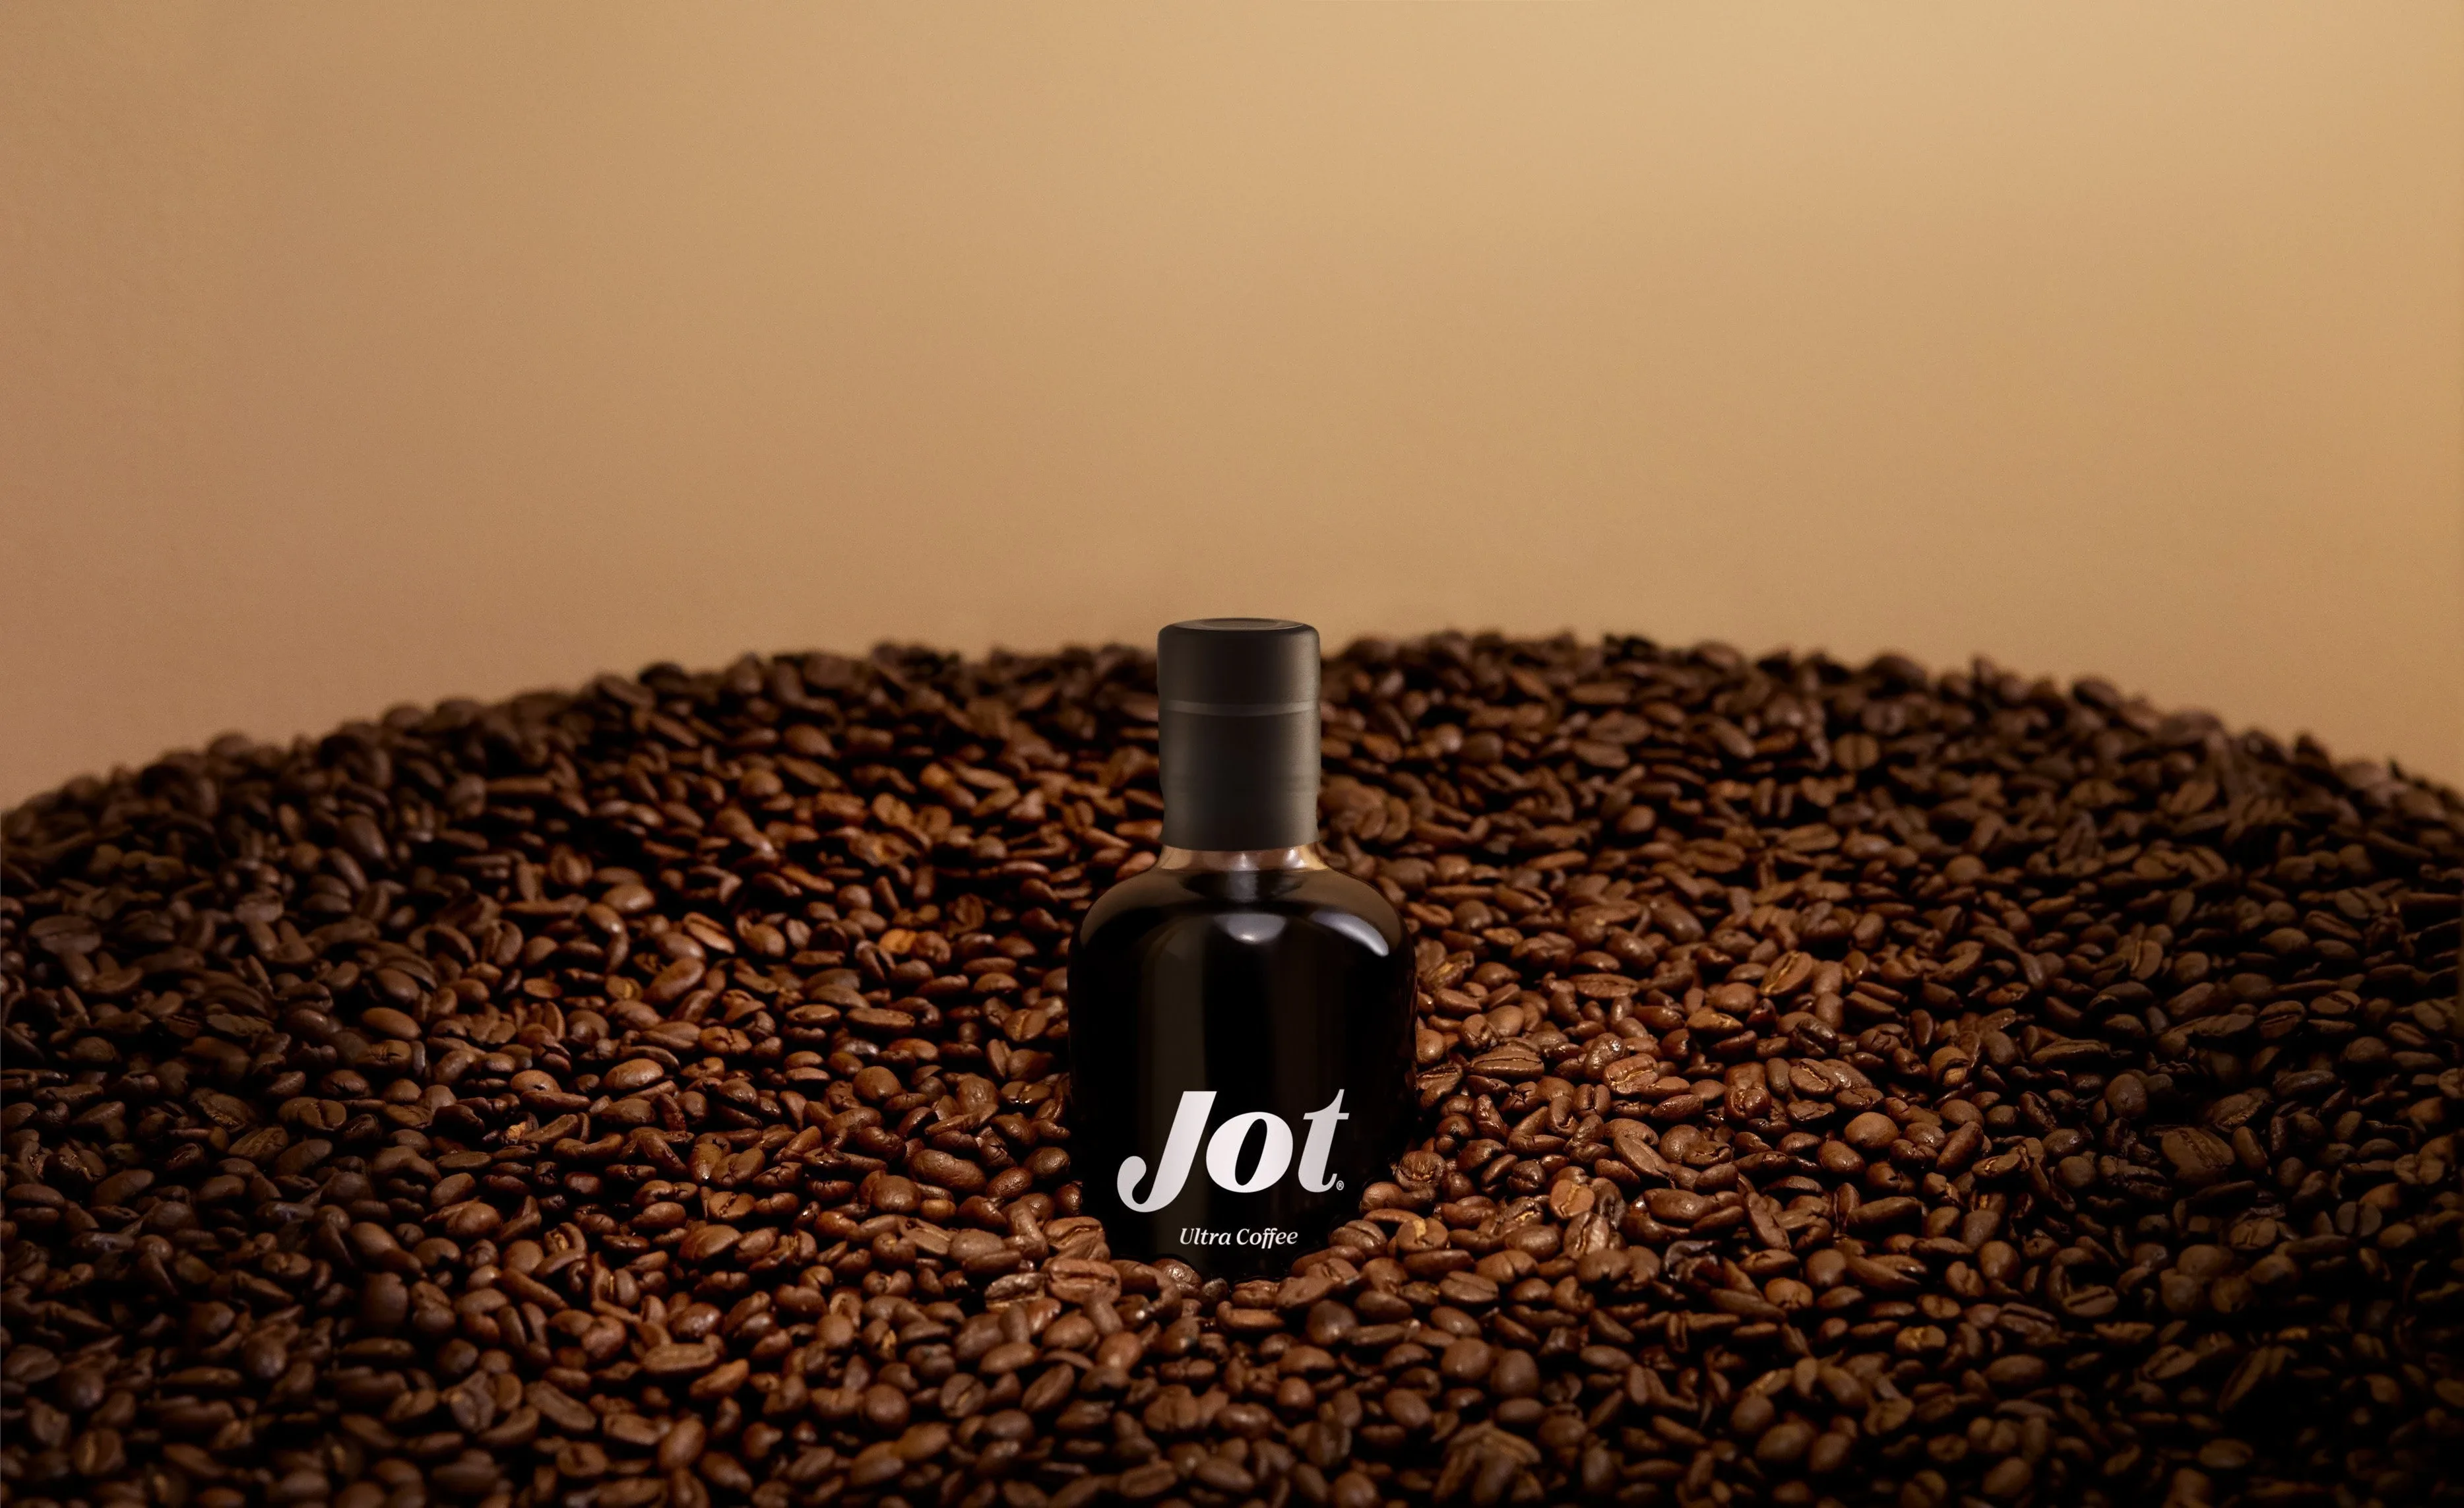 JOT COFFEE - Pure Coffee Or Pure Marketing 